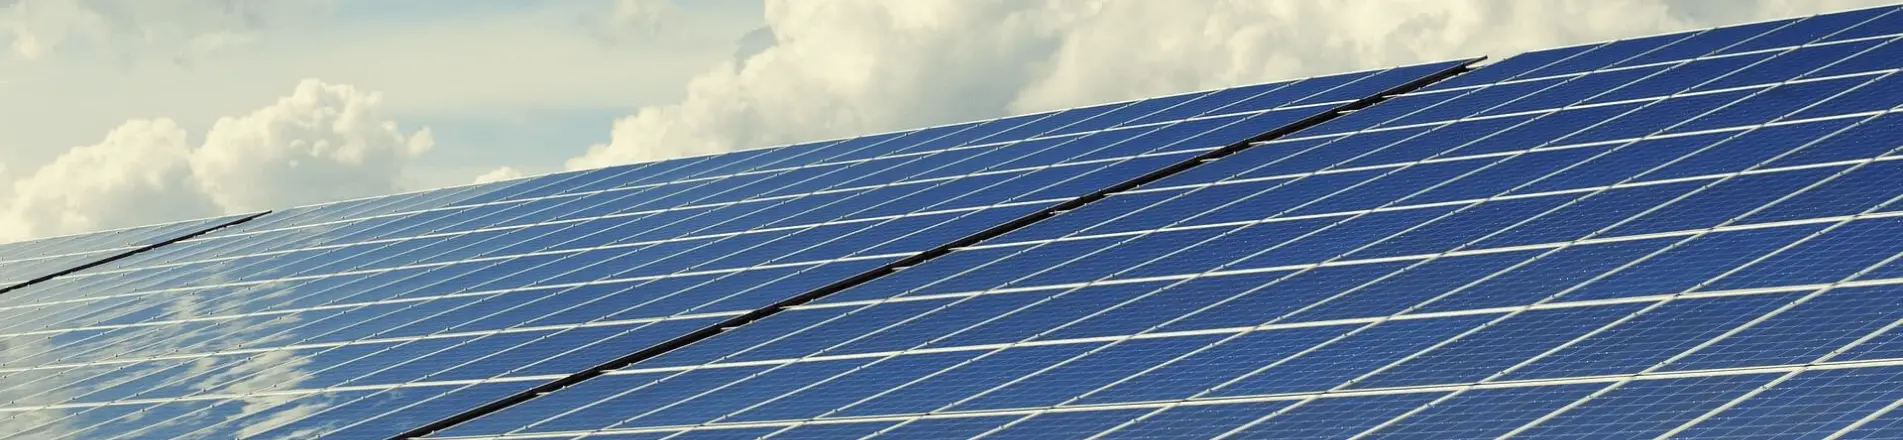 How To Improve Solar Panel Efficiency